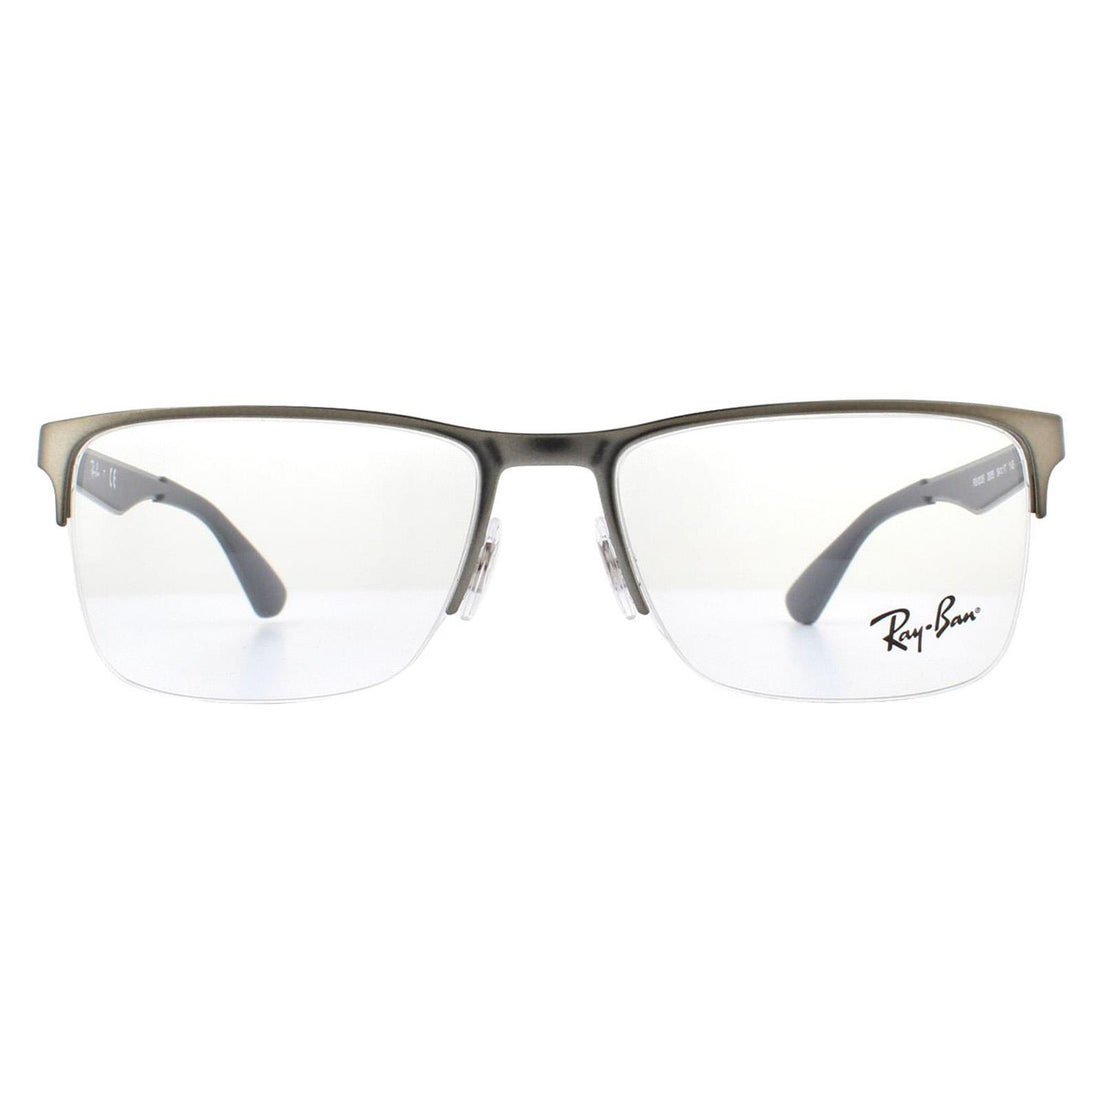 Ray-Ban 6335 Glasses Frames Silver Grey 54